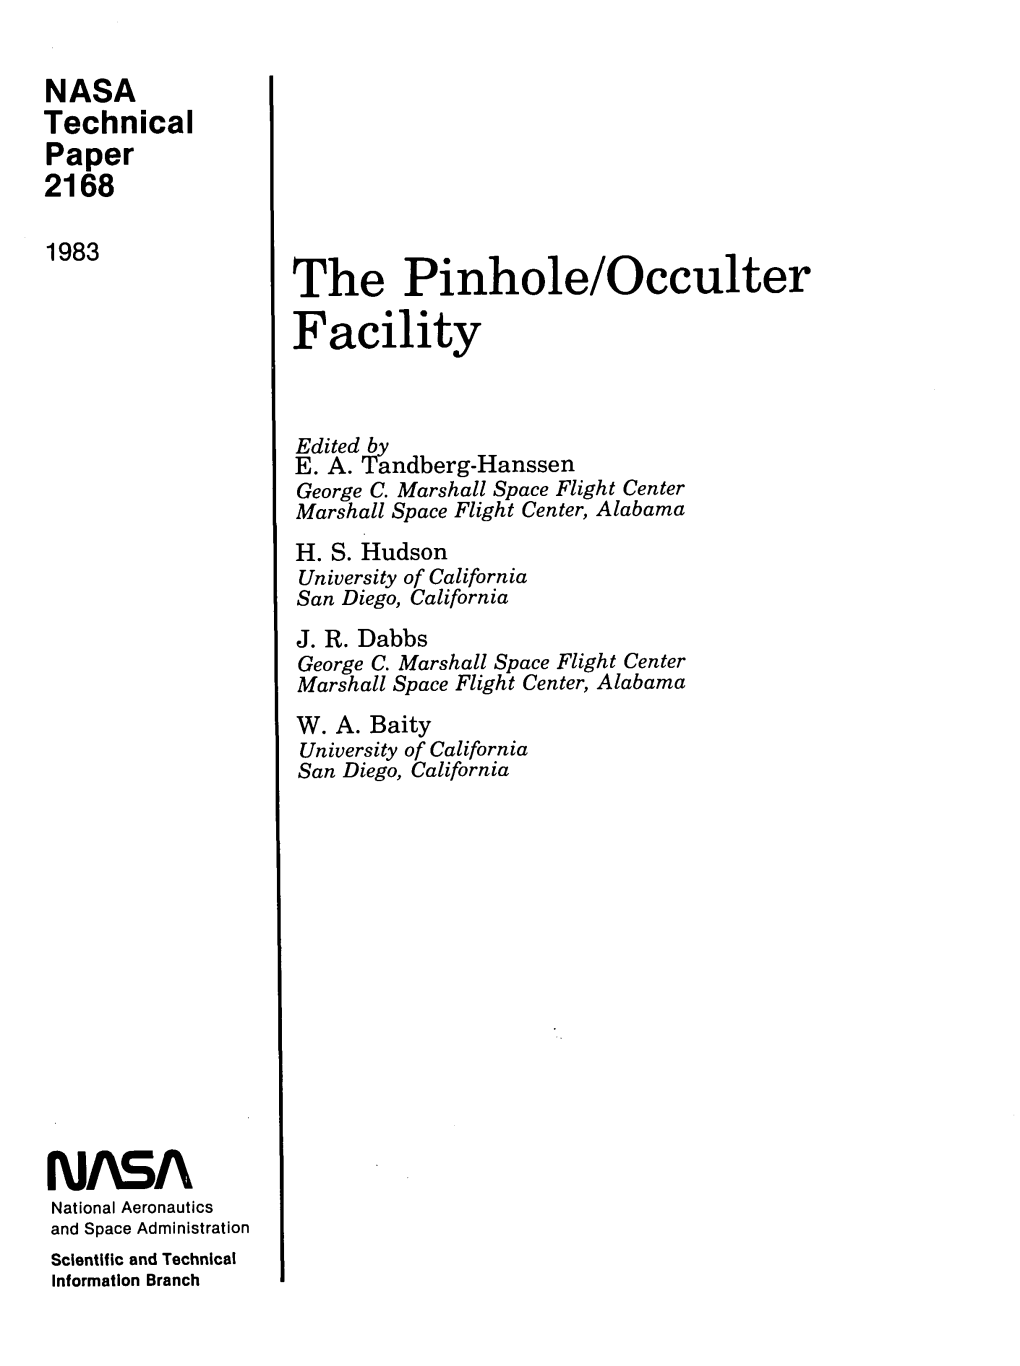 The Pinhole/Occulter Facility